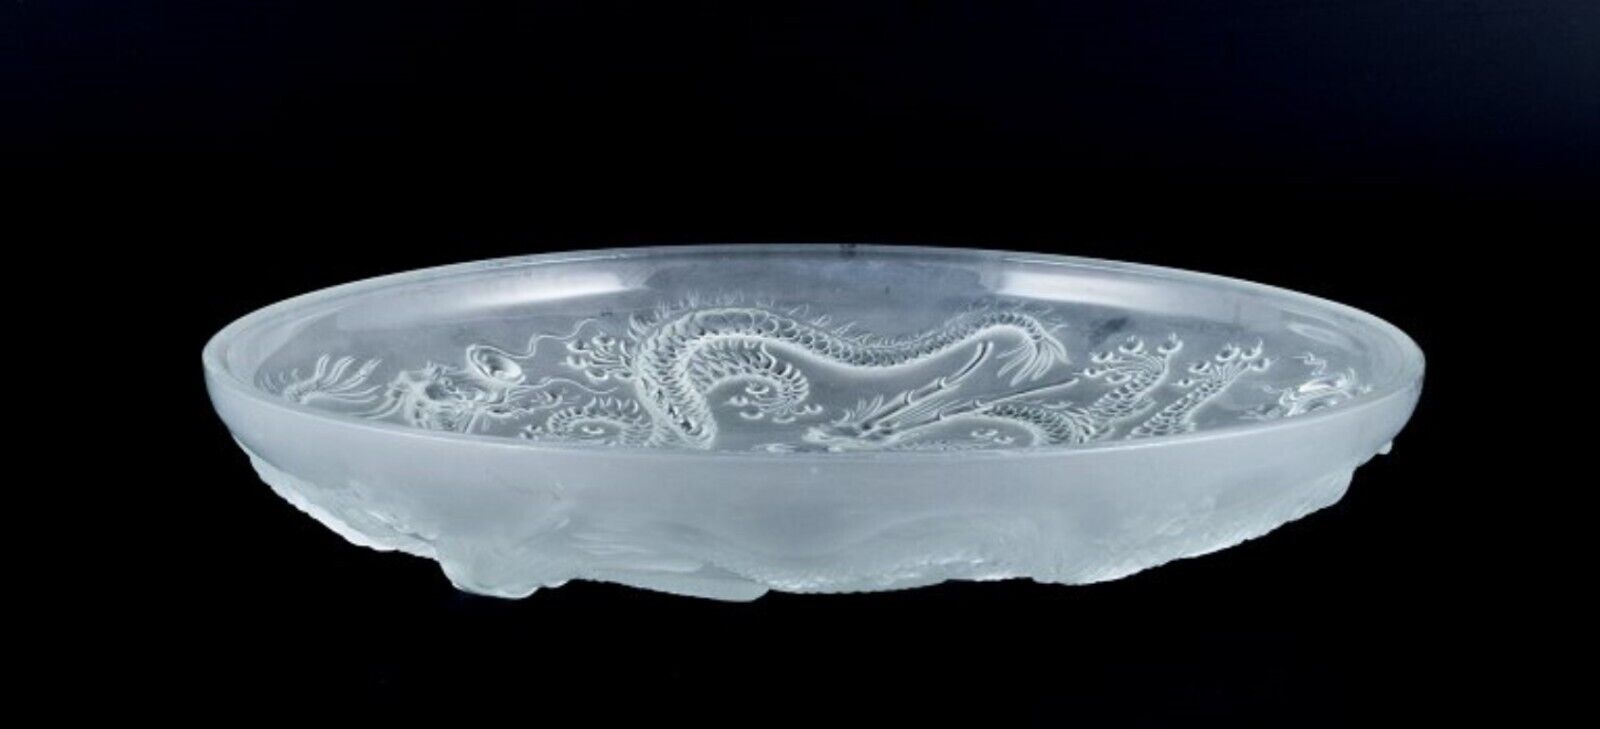 Josef Inwald Colossal Art Deco art glass bowl in Barolac glass 1930/40s